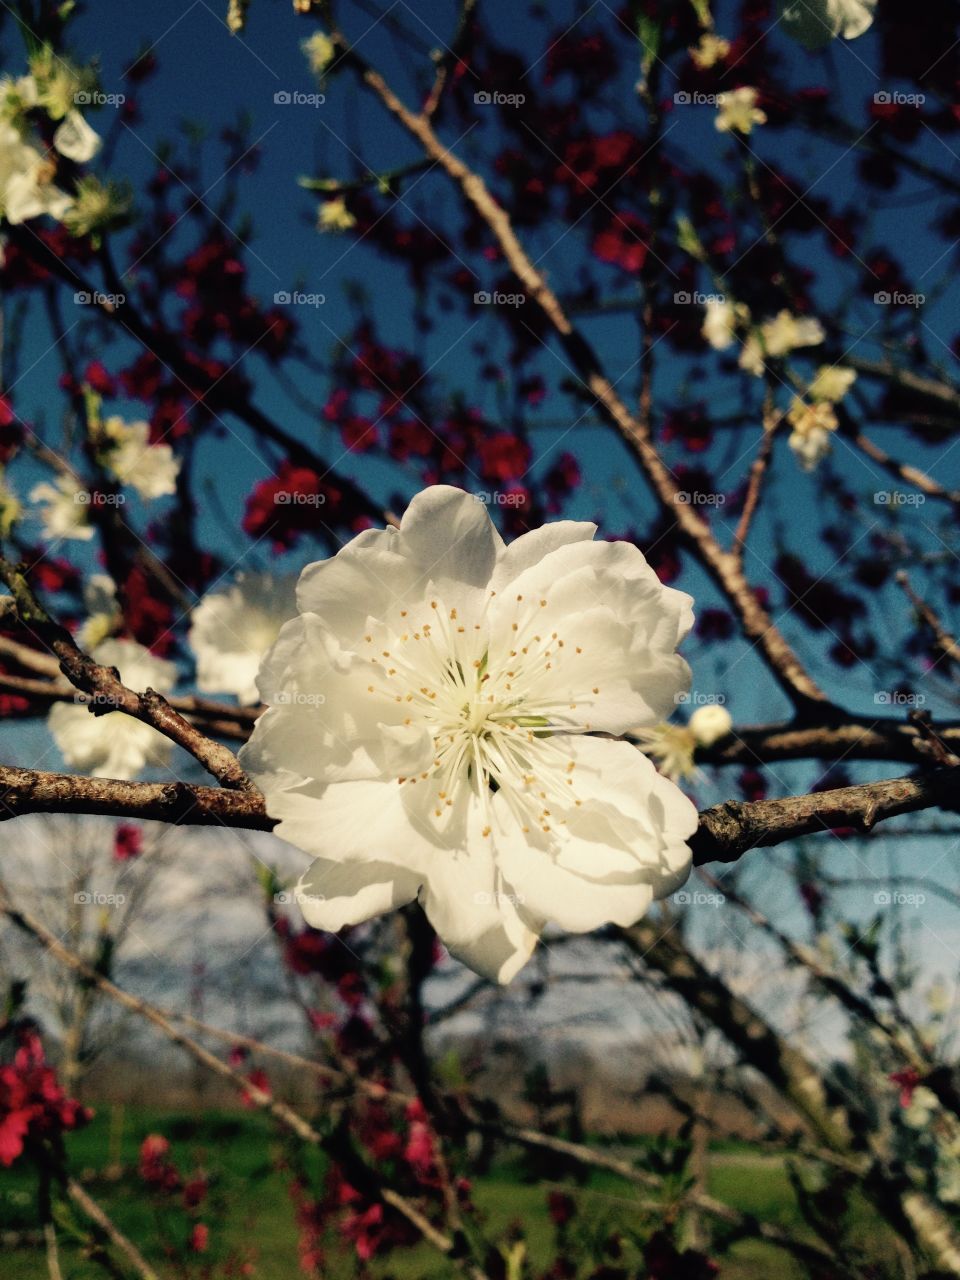 Peach tree blooms